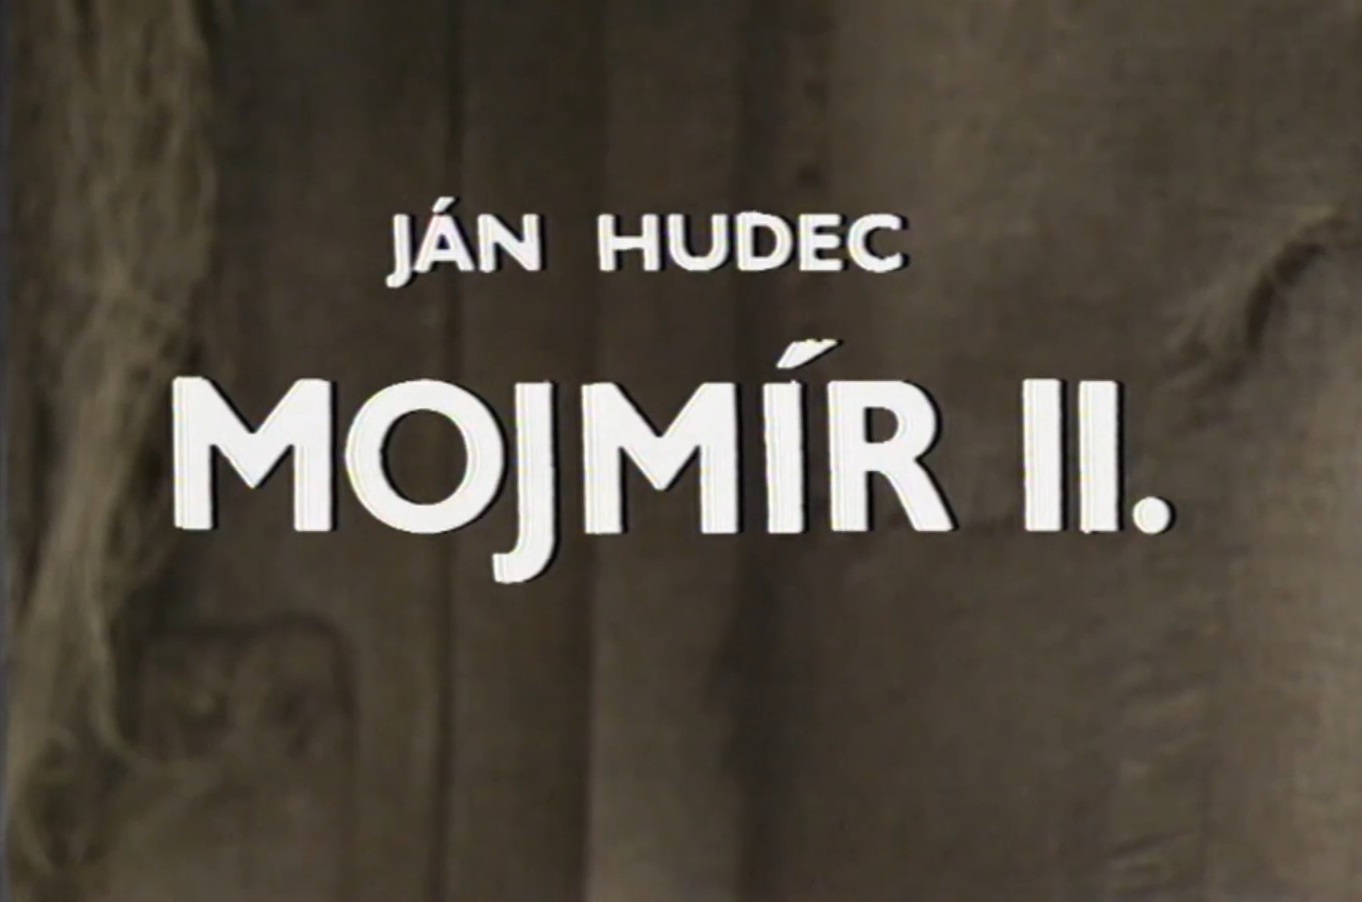 Stiahni si Filmy CZ/SK dabing Mojmir II. (1981)(SK)[TvRip] = CSFD 68%